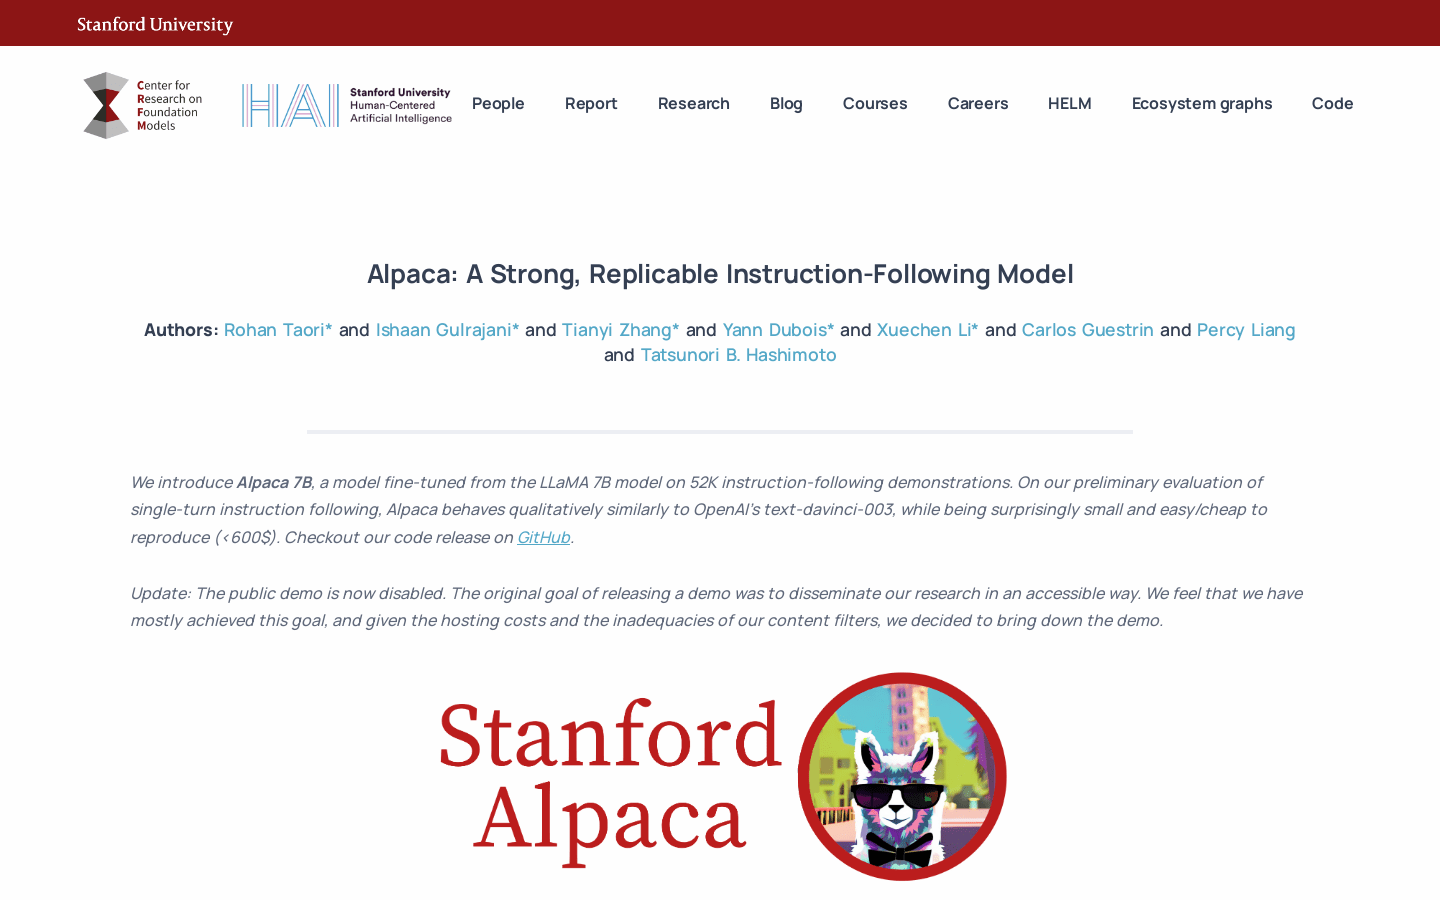 Stanford Alpaca (Alpaca 7B model trained on 52K instructions) illustration 